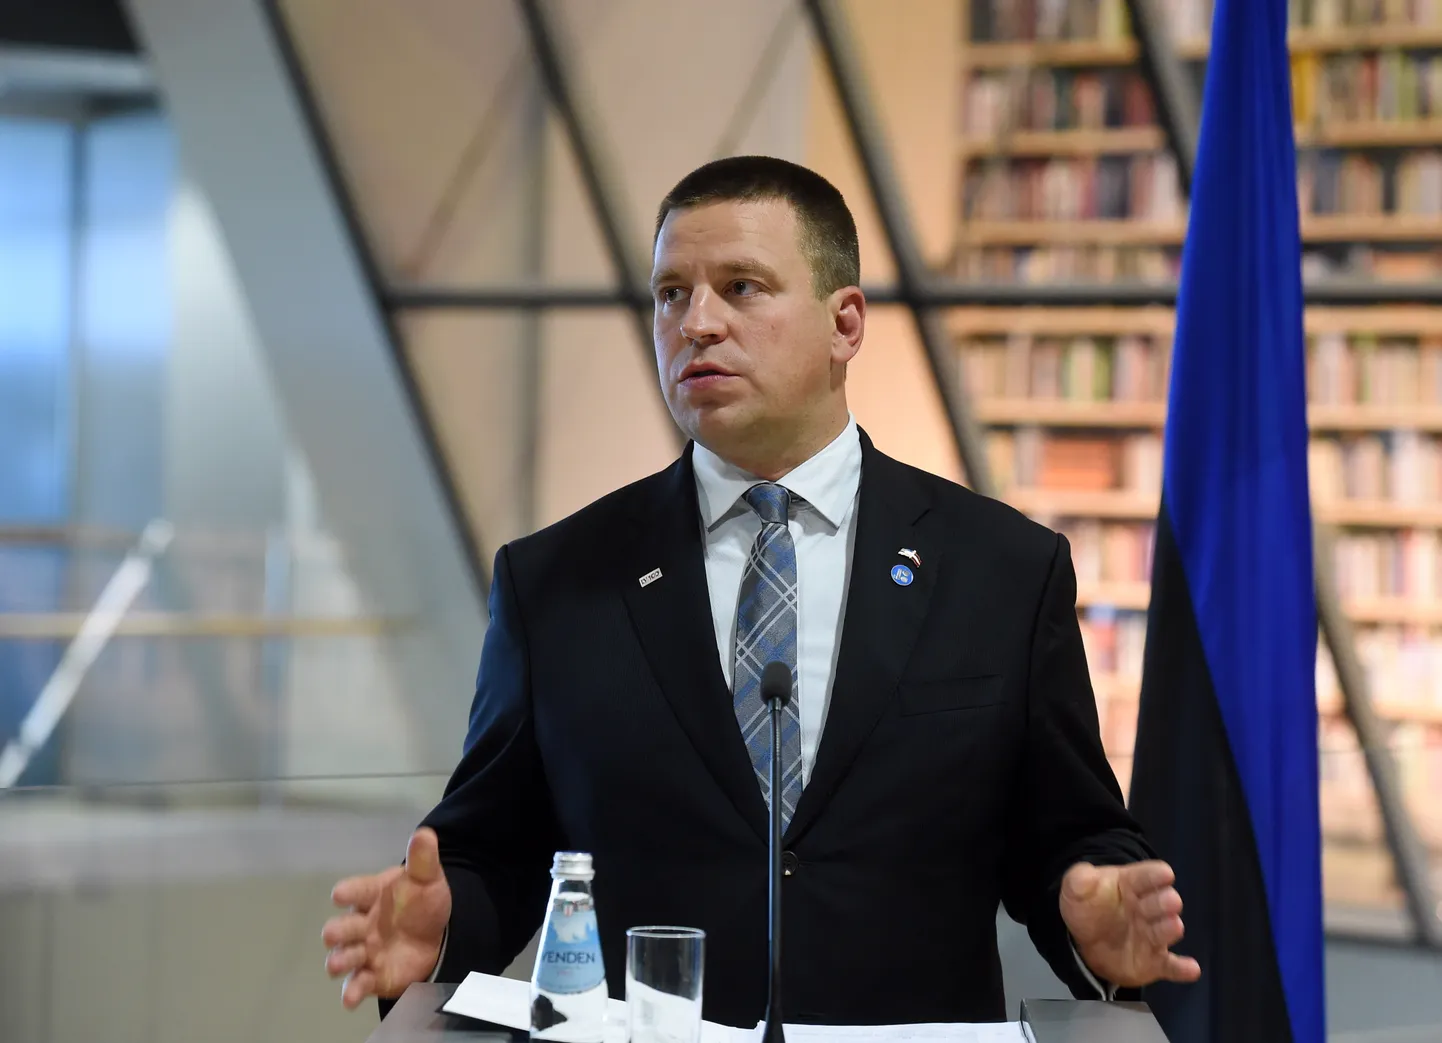 Igaunijas premjerministrs Jiri Ratass